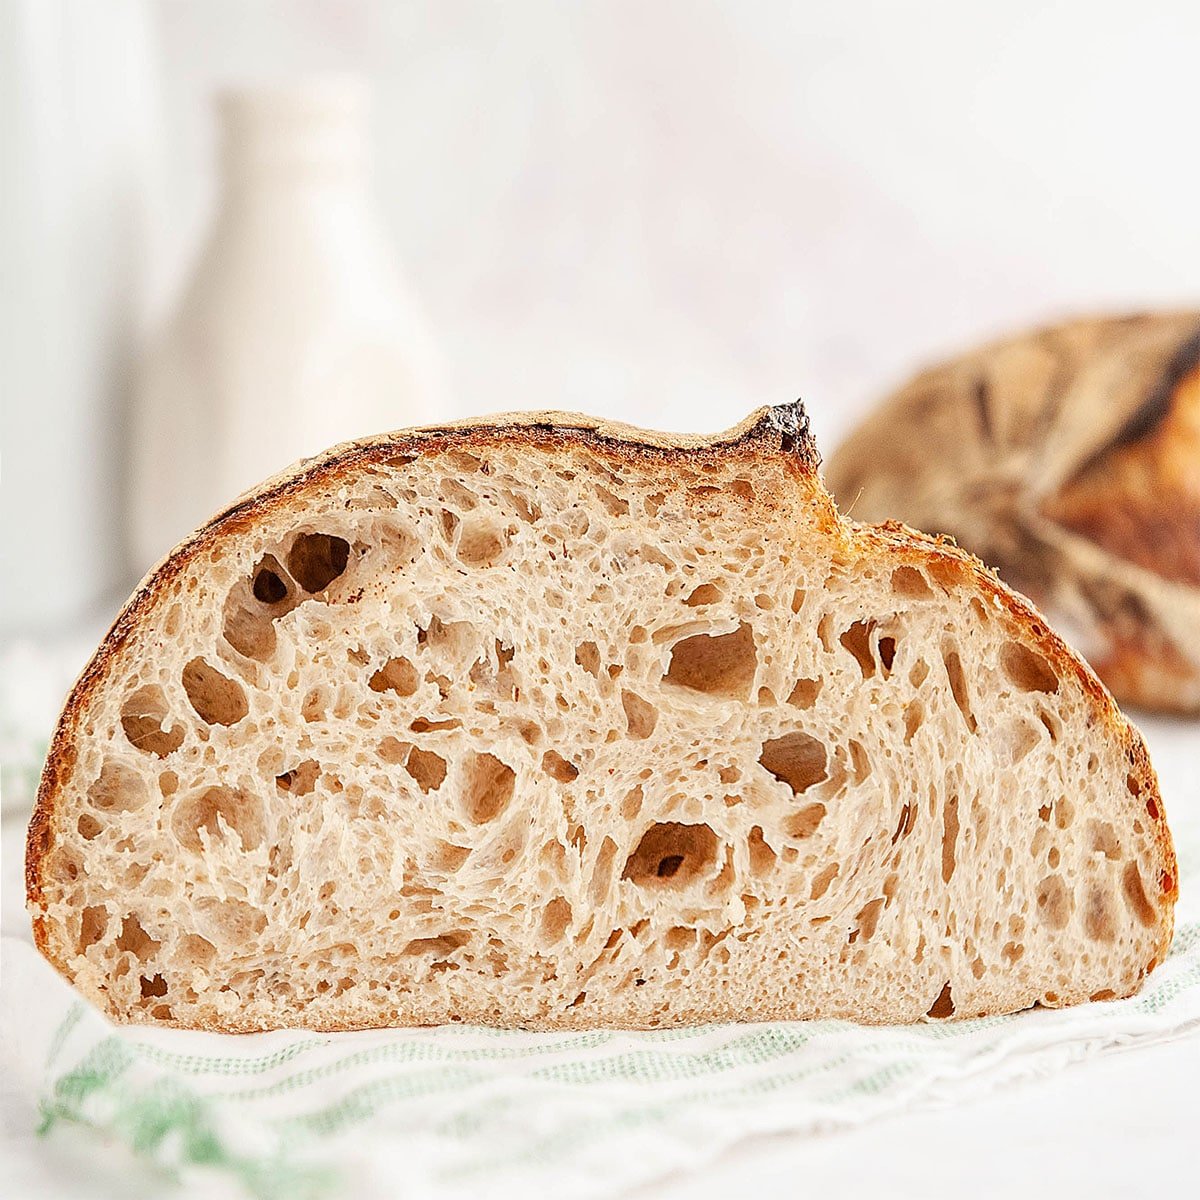 Beginners Sourdough Bread Recipe Step-By-Step + Video Tutorial – Sugar